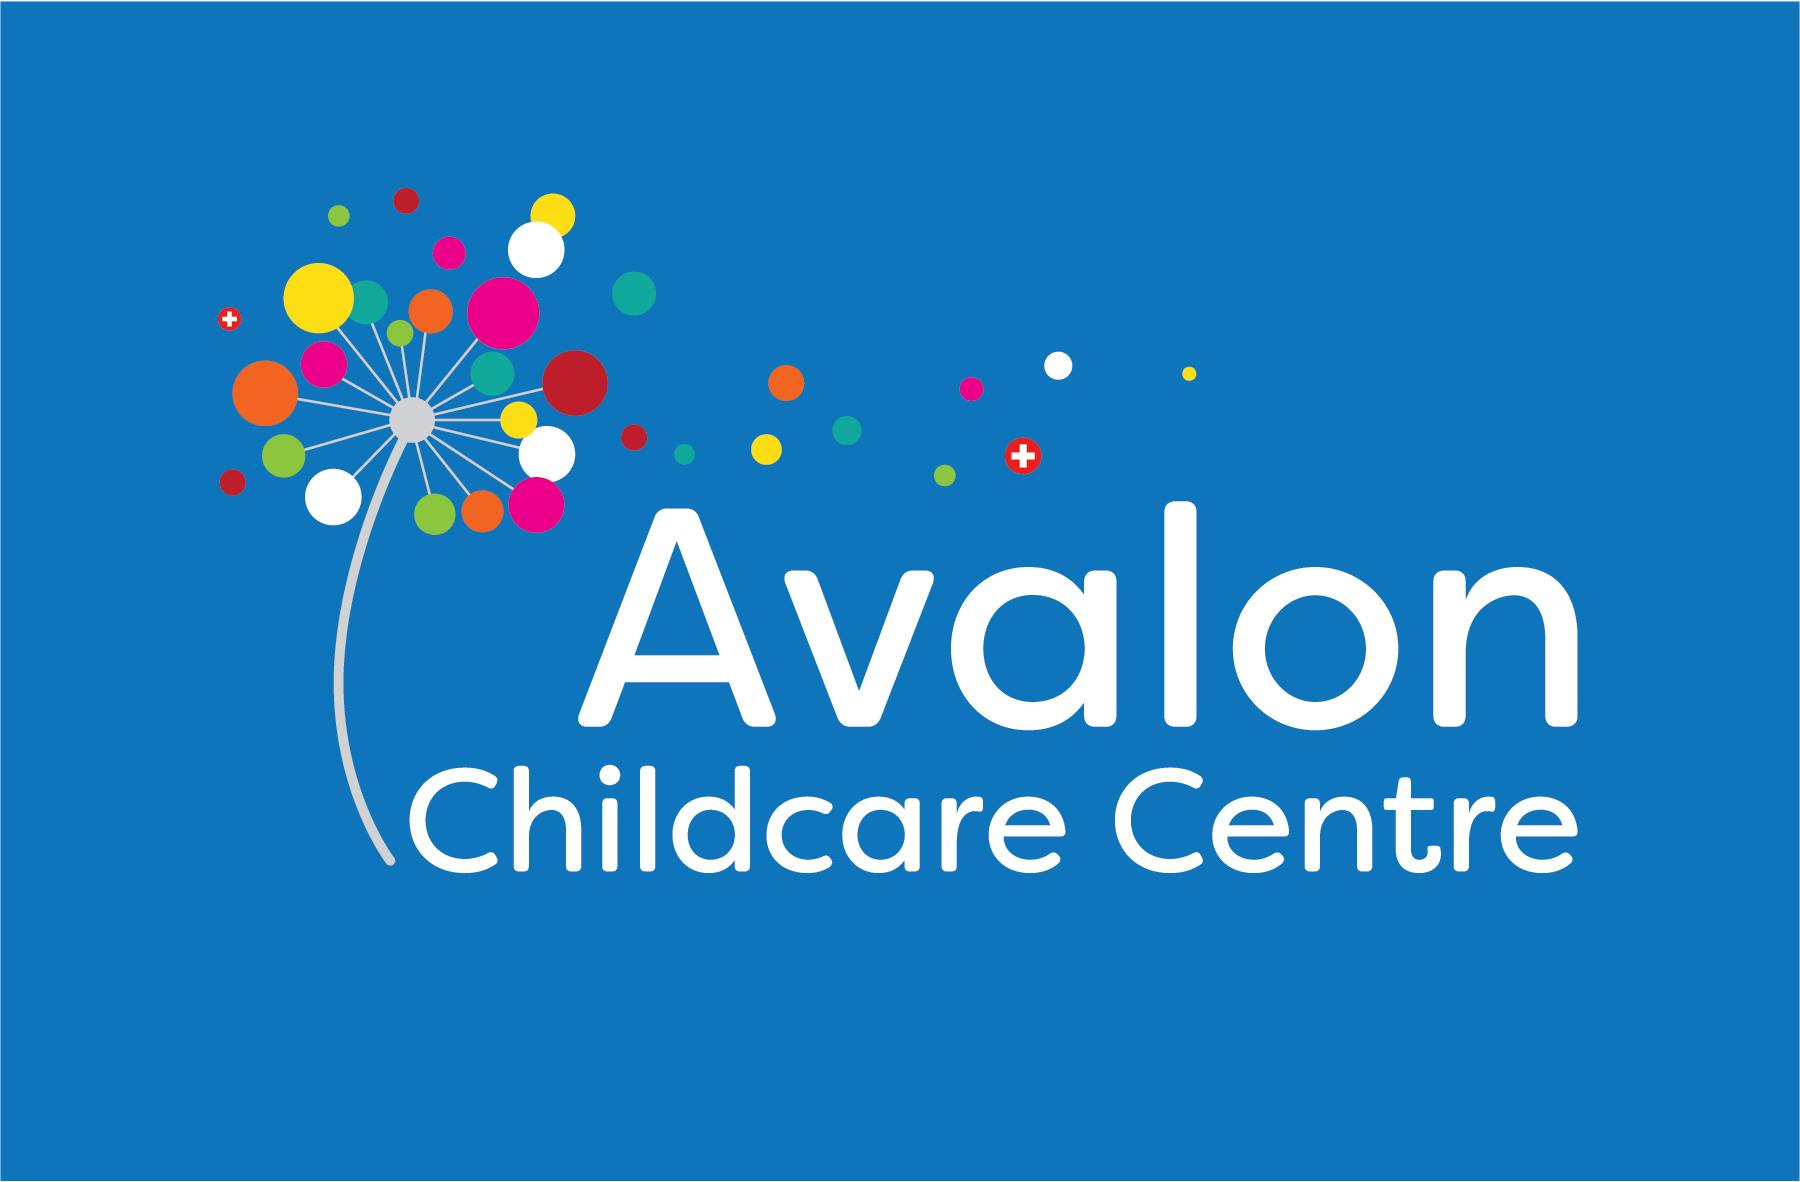 A picture of Avalon Childcare Centre